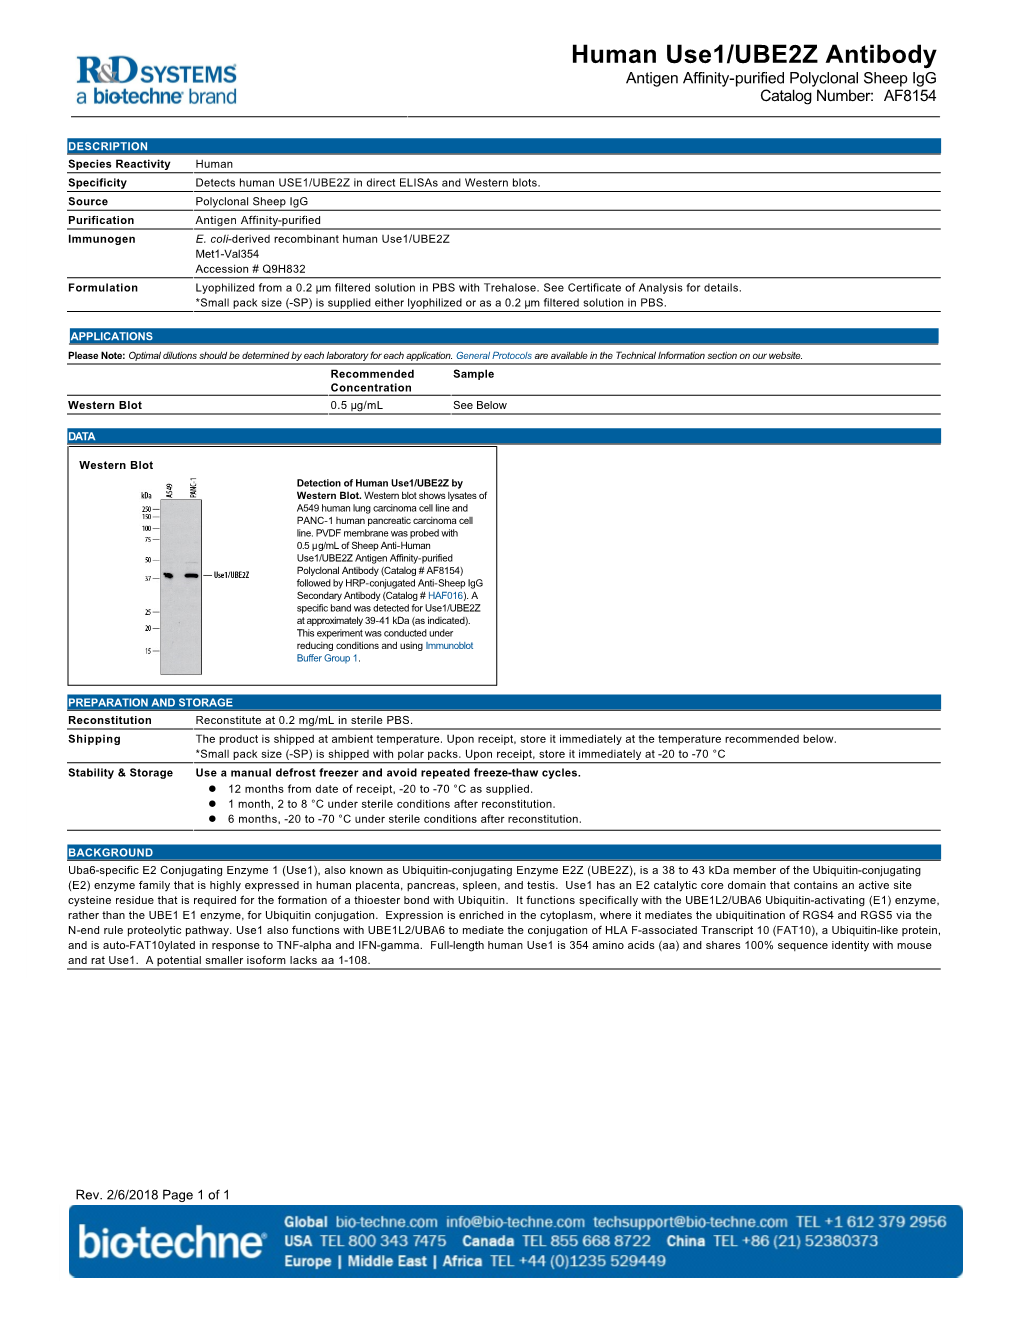 Human Use1/UBE2Z Antibody Antigen Affinity-Purified Polyclonal Sheep Igg Catalog Number: AF8154